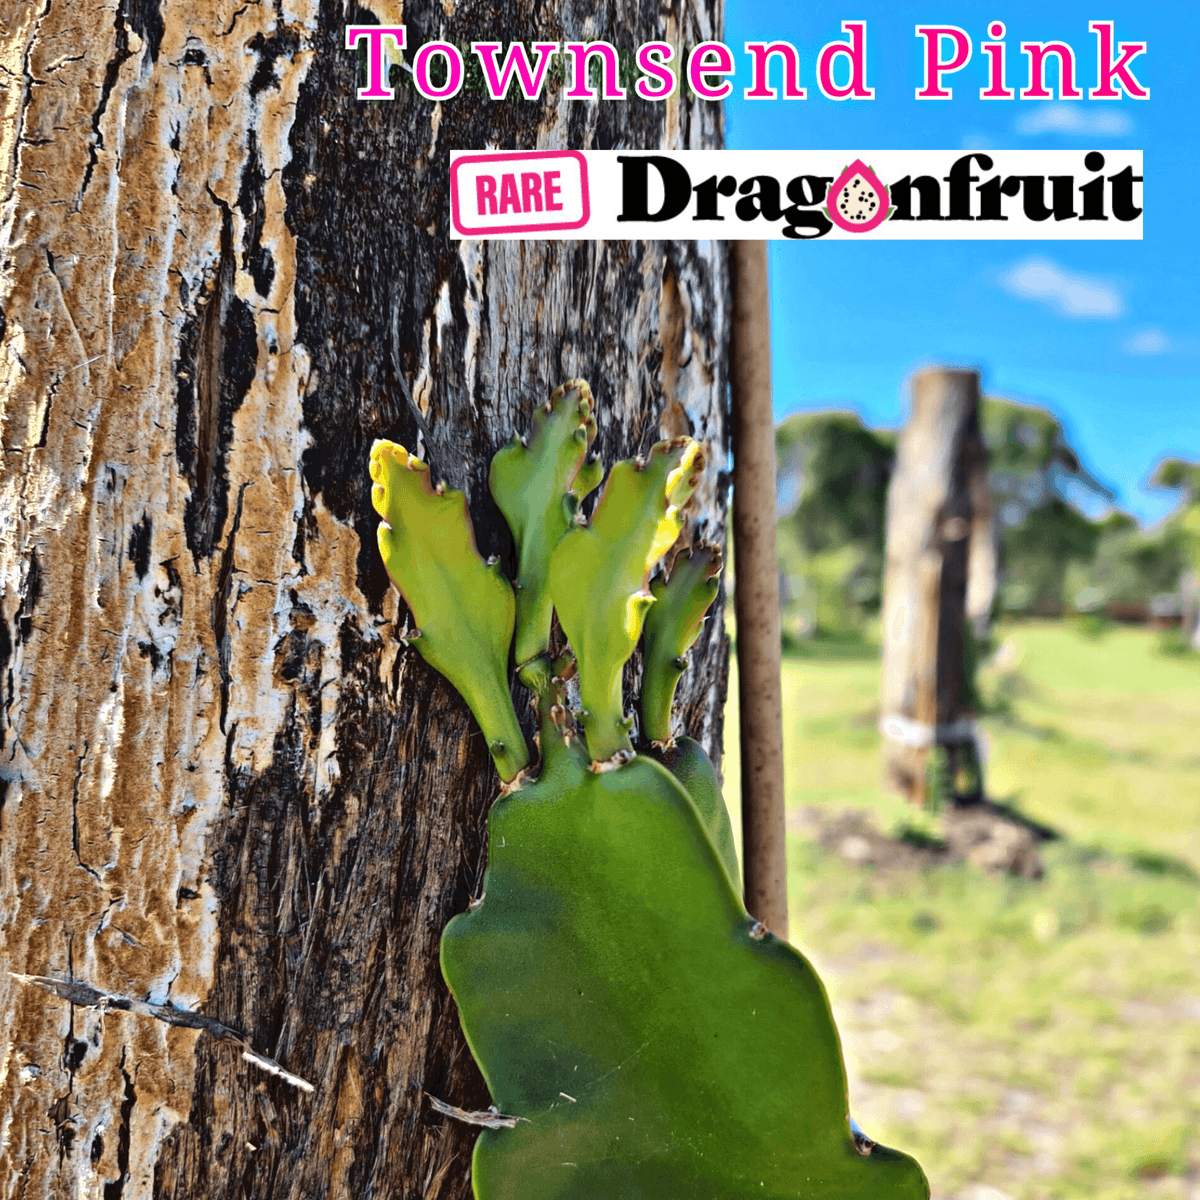 Townsend Pink – Hylocereus sp. Dragon fruit - Rare Dragon Fruit